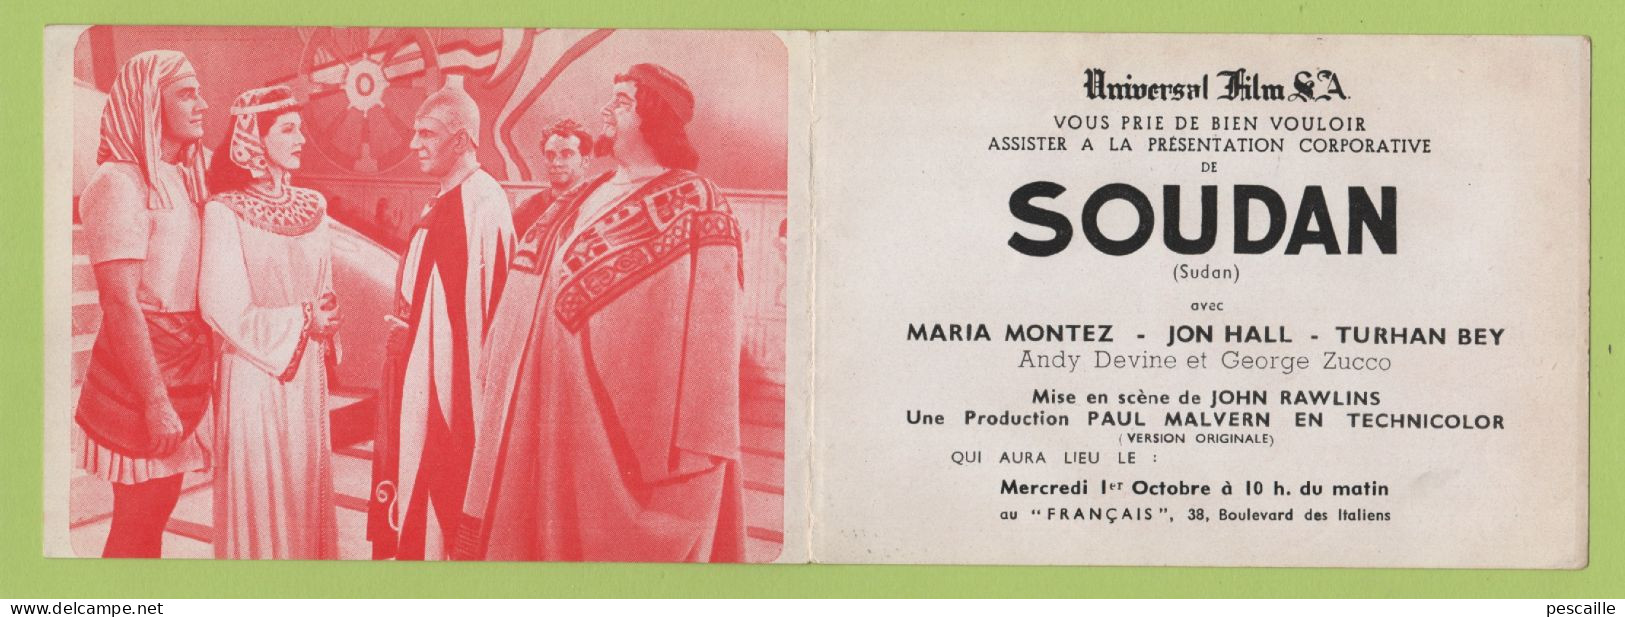 1945 ? - INVITATION UNIVERSAL FILM S.A. A LA PROJECTION DU FILM SOUDAN SUDAN AVEC MARIA MONTEZ JON HALL TURHAN BEY ... - Publicidad